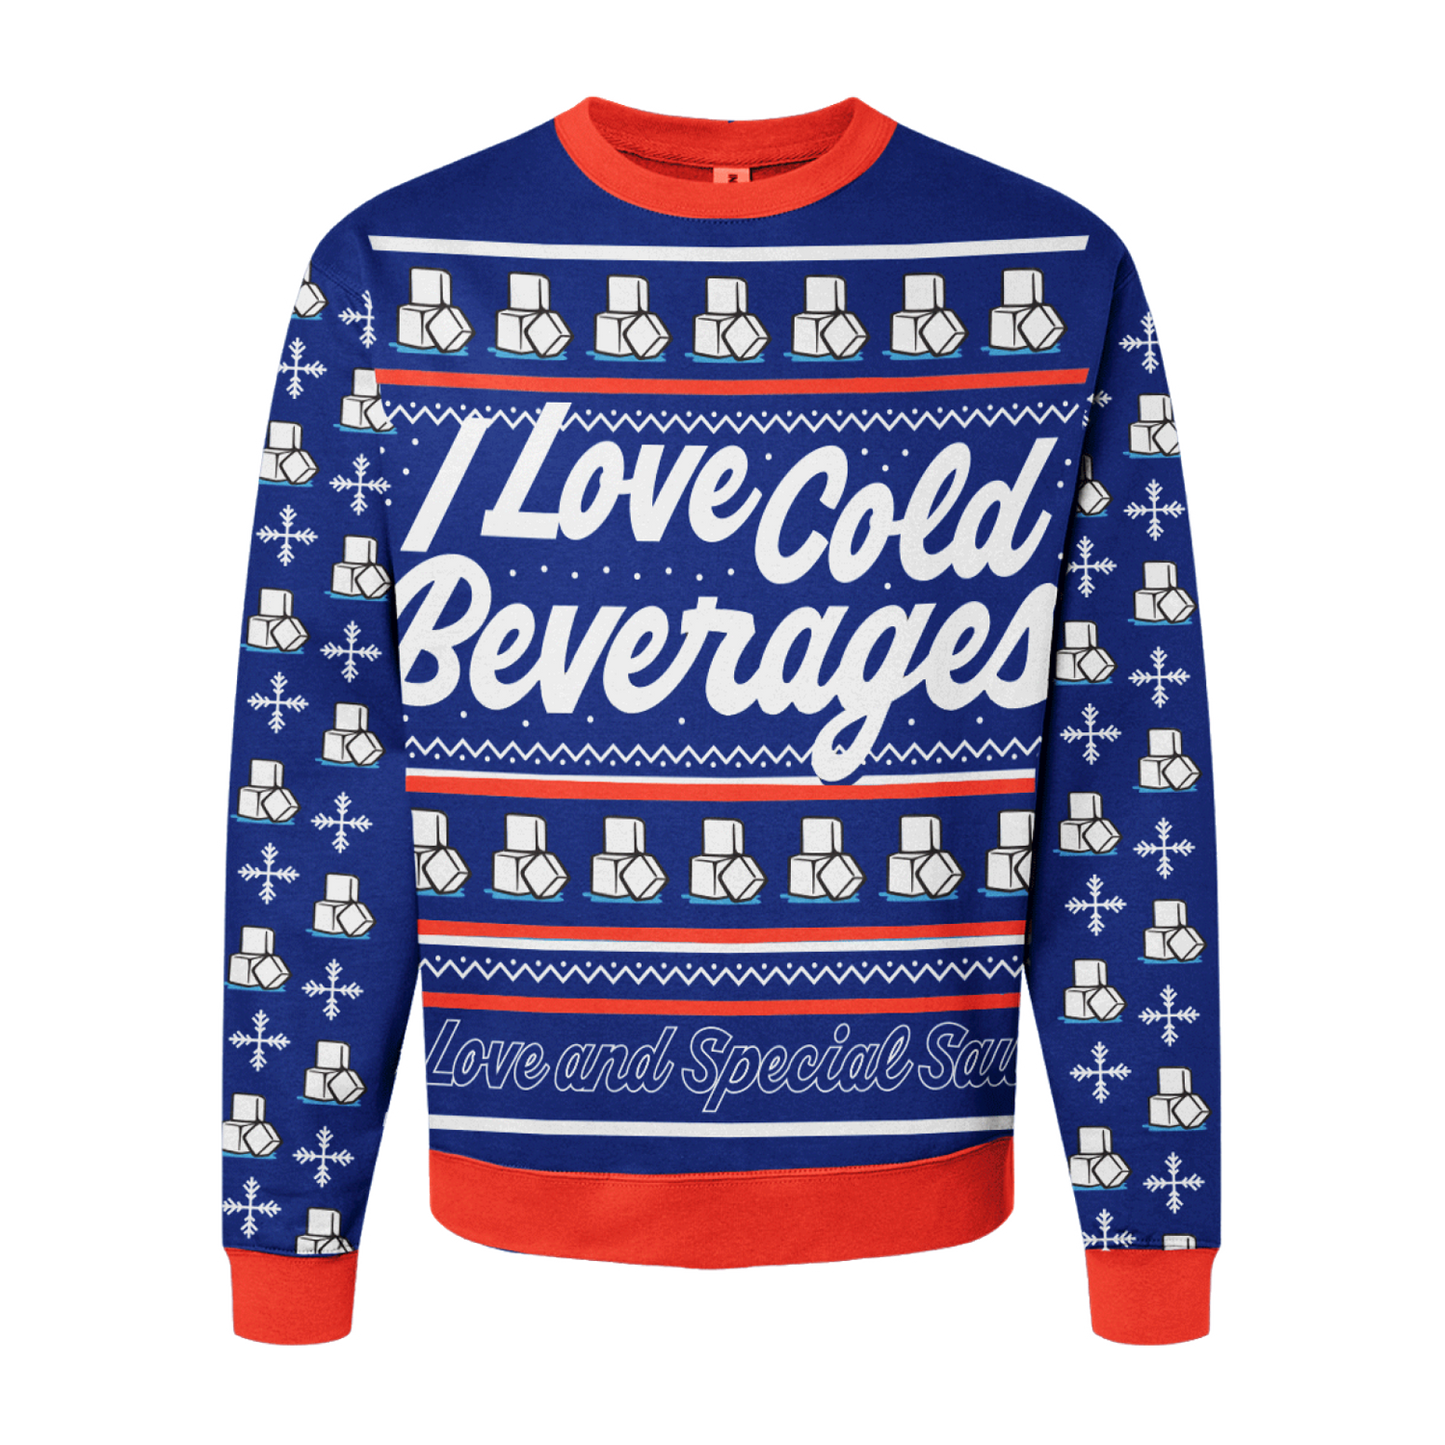 Cold Beverages Custom Sweatshirt